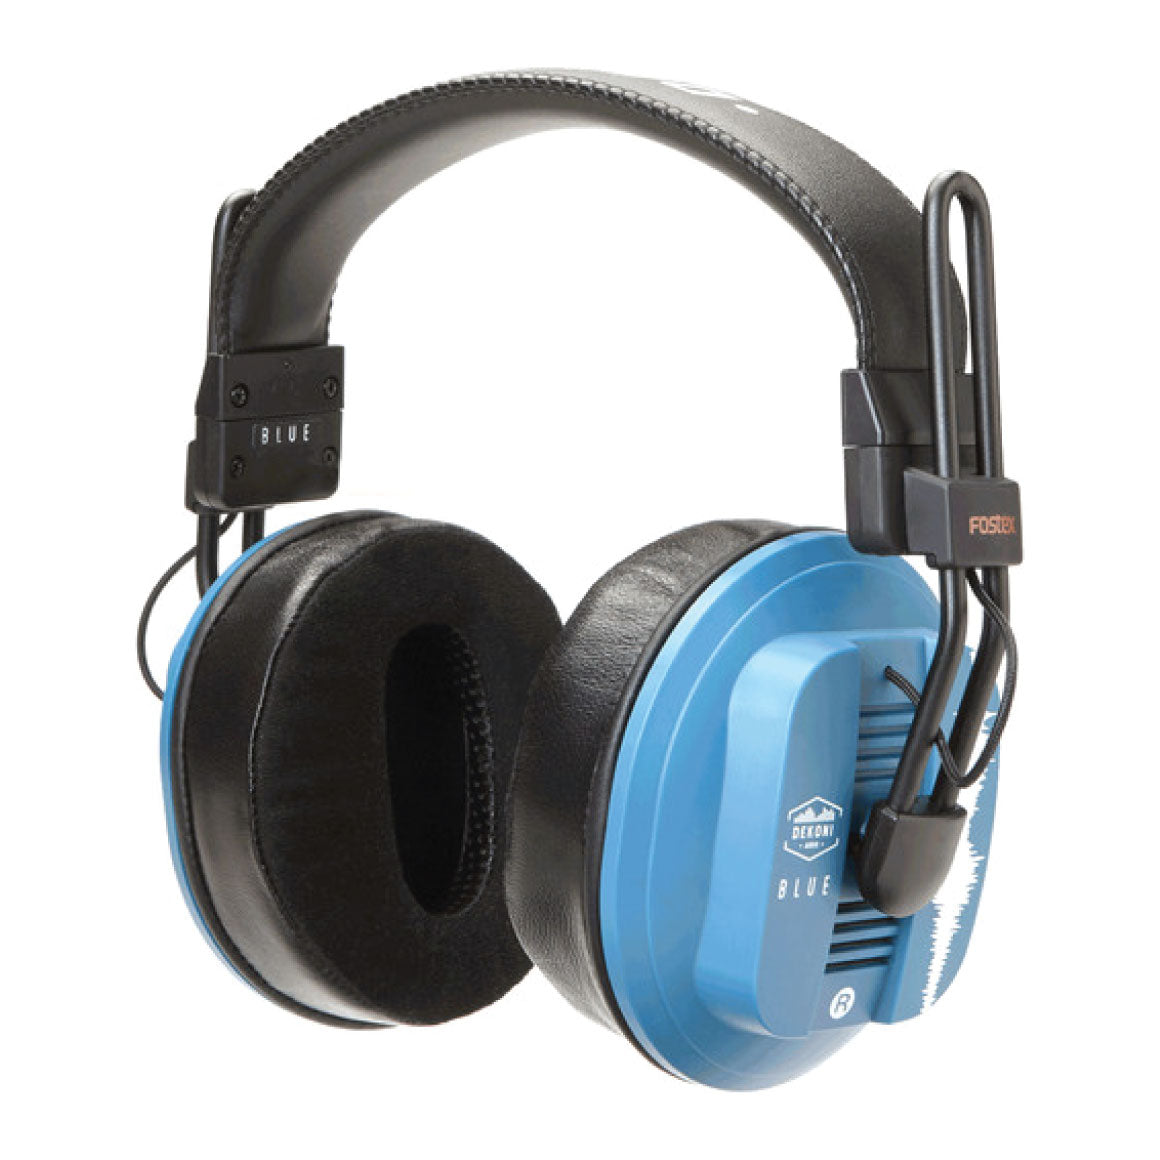 Headphone-Zone-Dekoni-Audio-Blue-Fostex